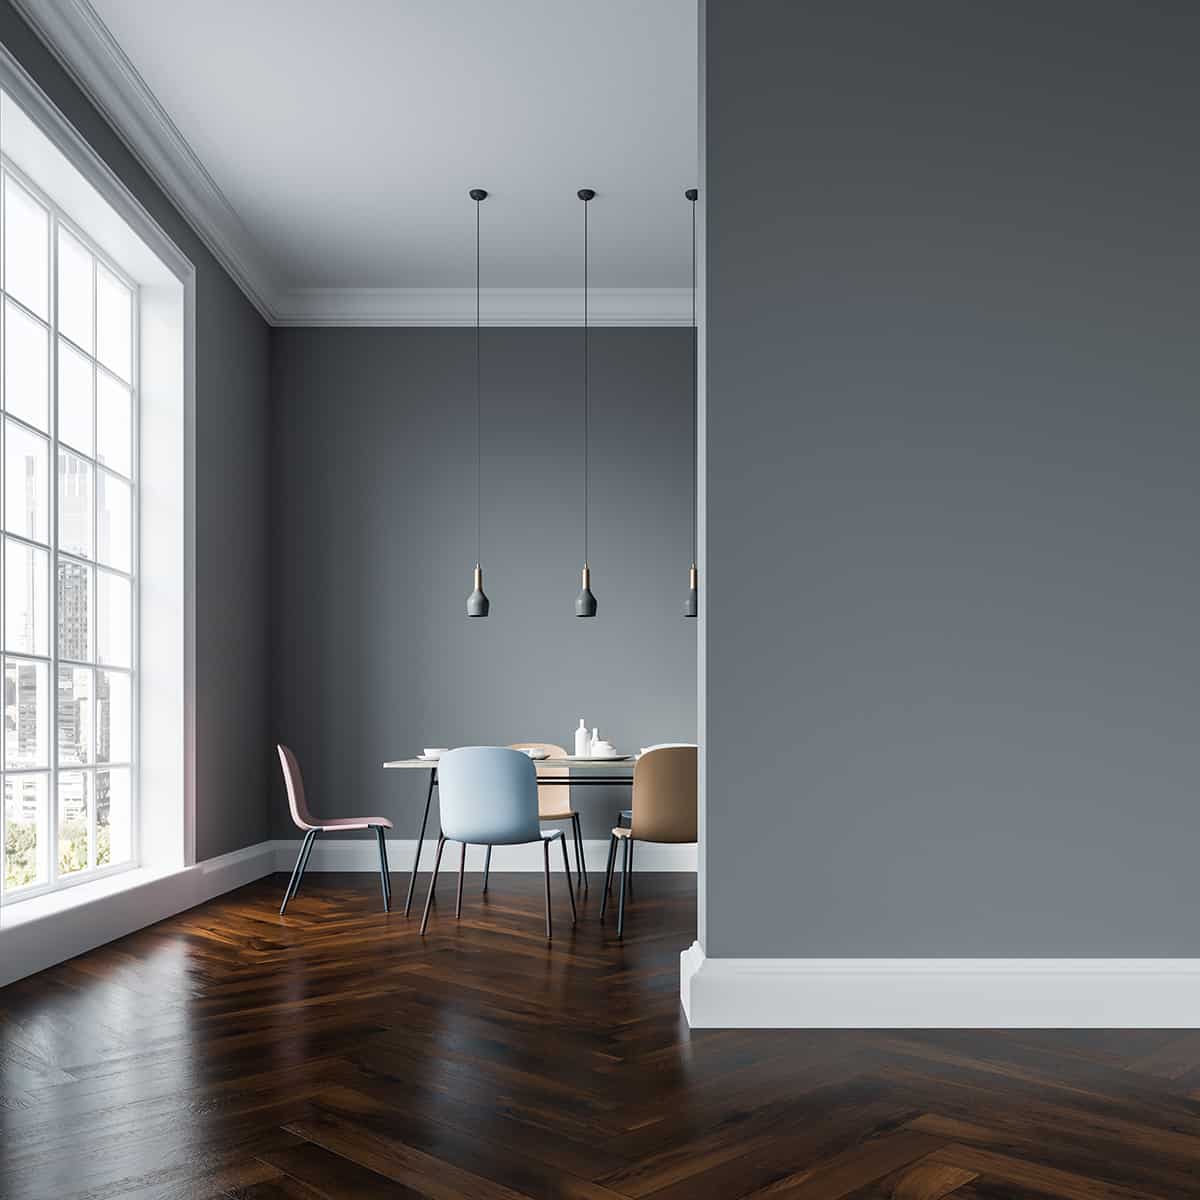 Wood Floor Goes With Gray Walls, Hardwood Floors With Gray Walls